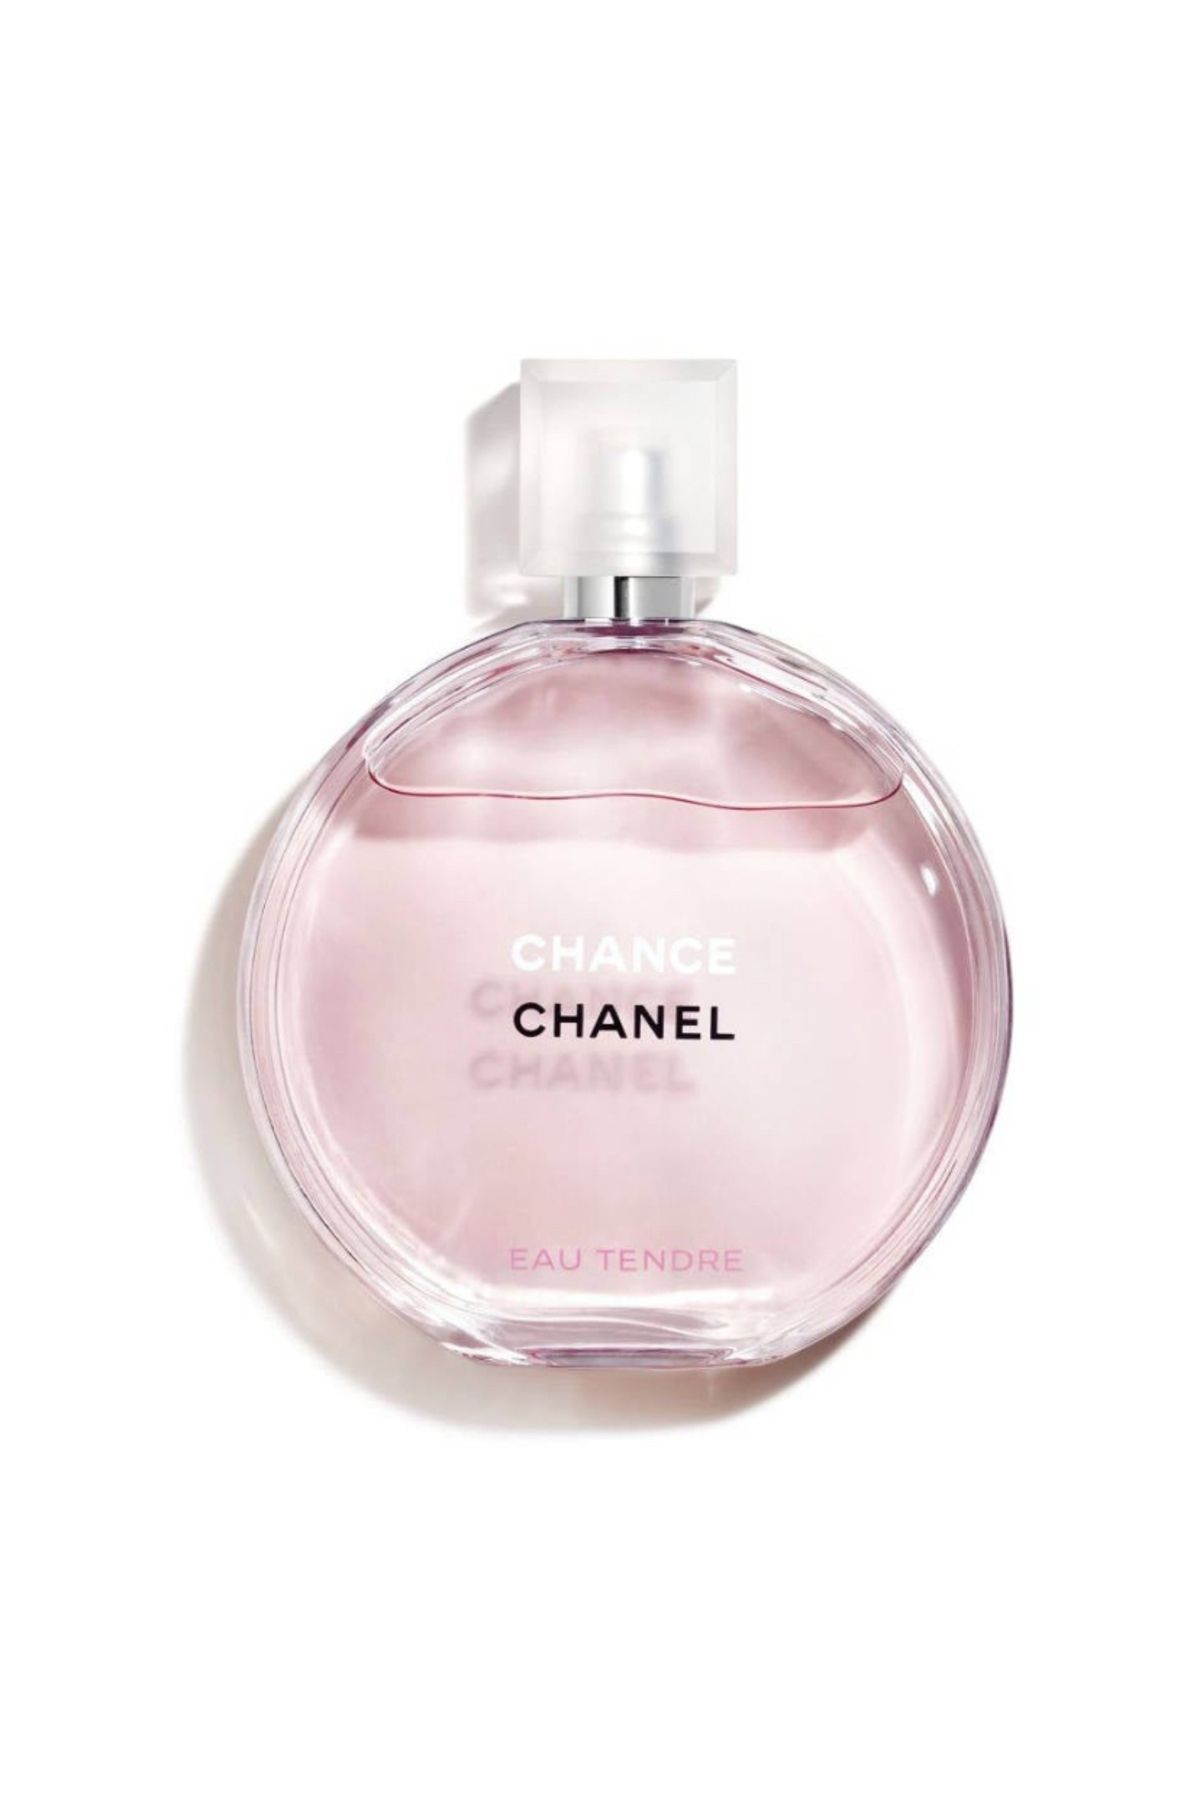 Chanel CHANCE EAU TENDRE EDT PARFUM 100ml Pinkestcosmetics